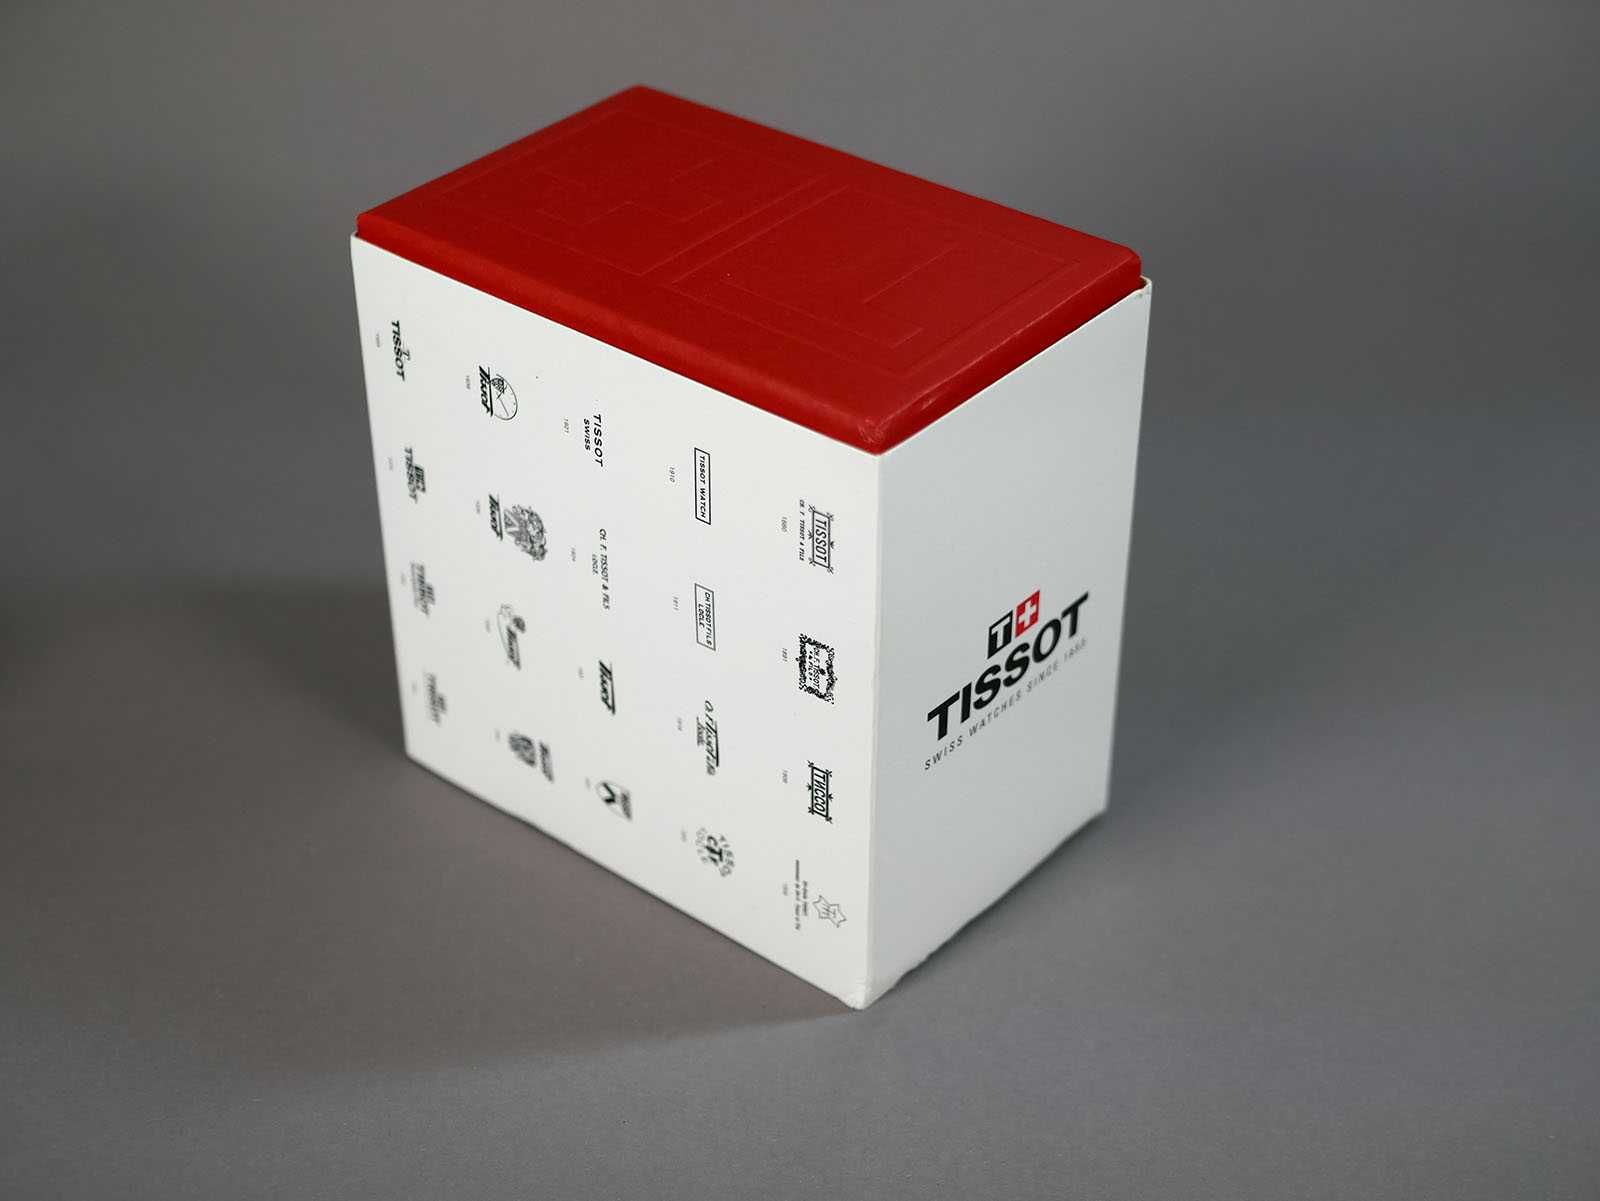 Часы Tissot T-Race Motogp Special Edition T115.417.37.061.04